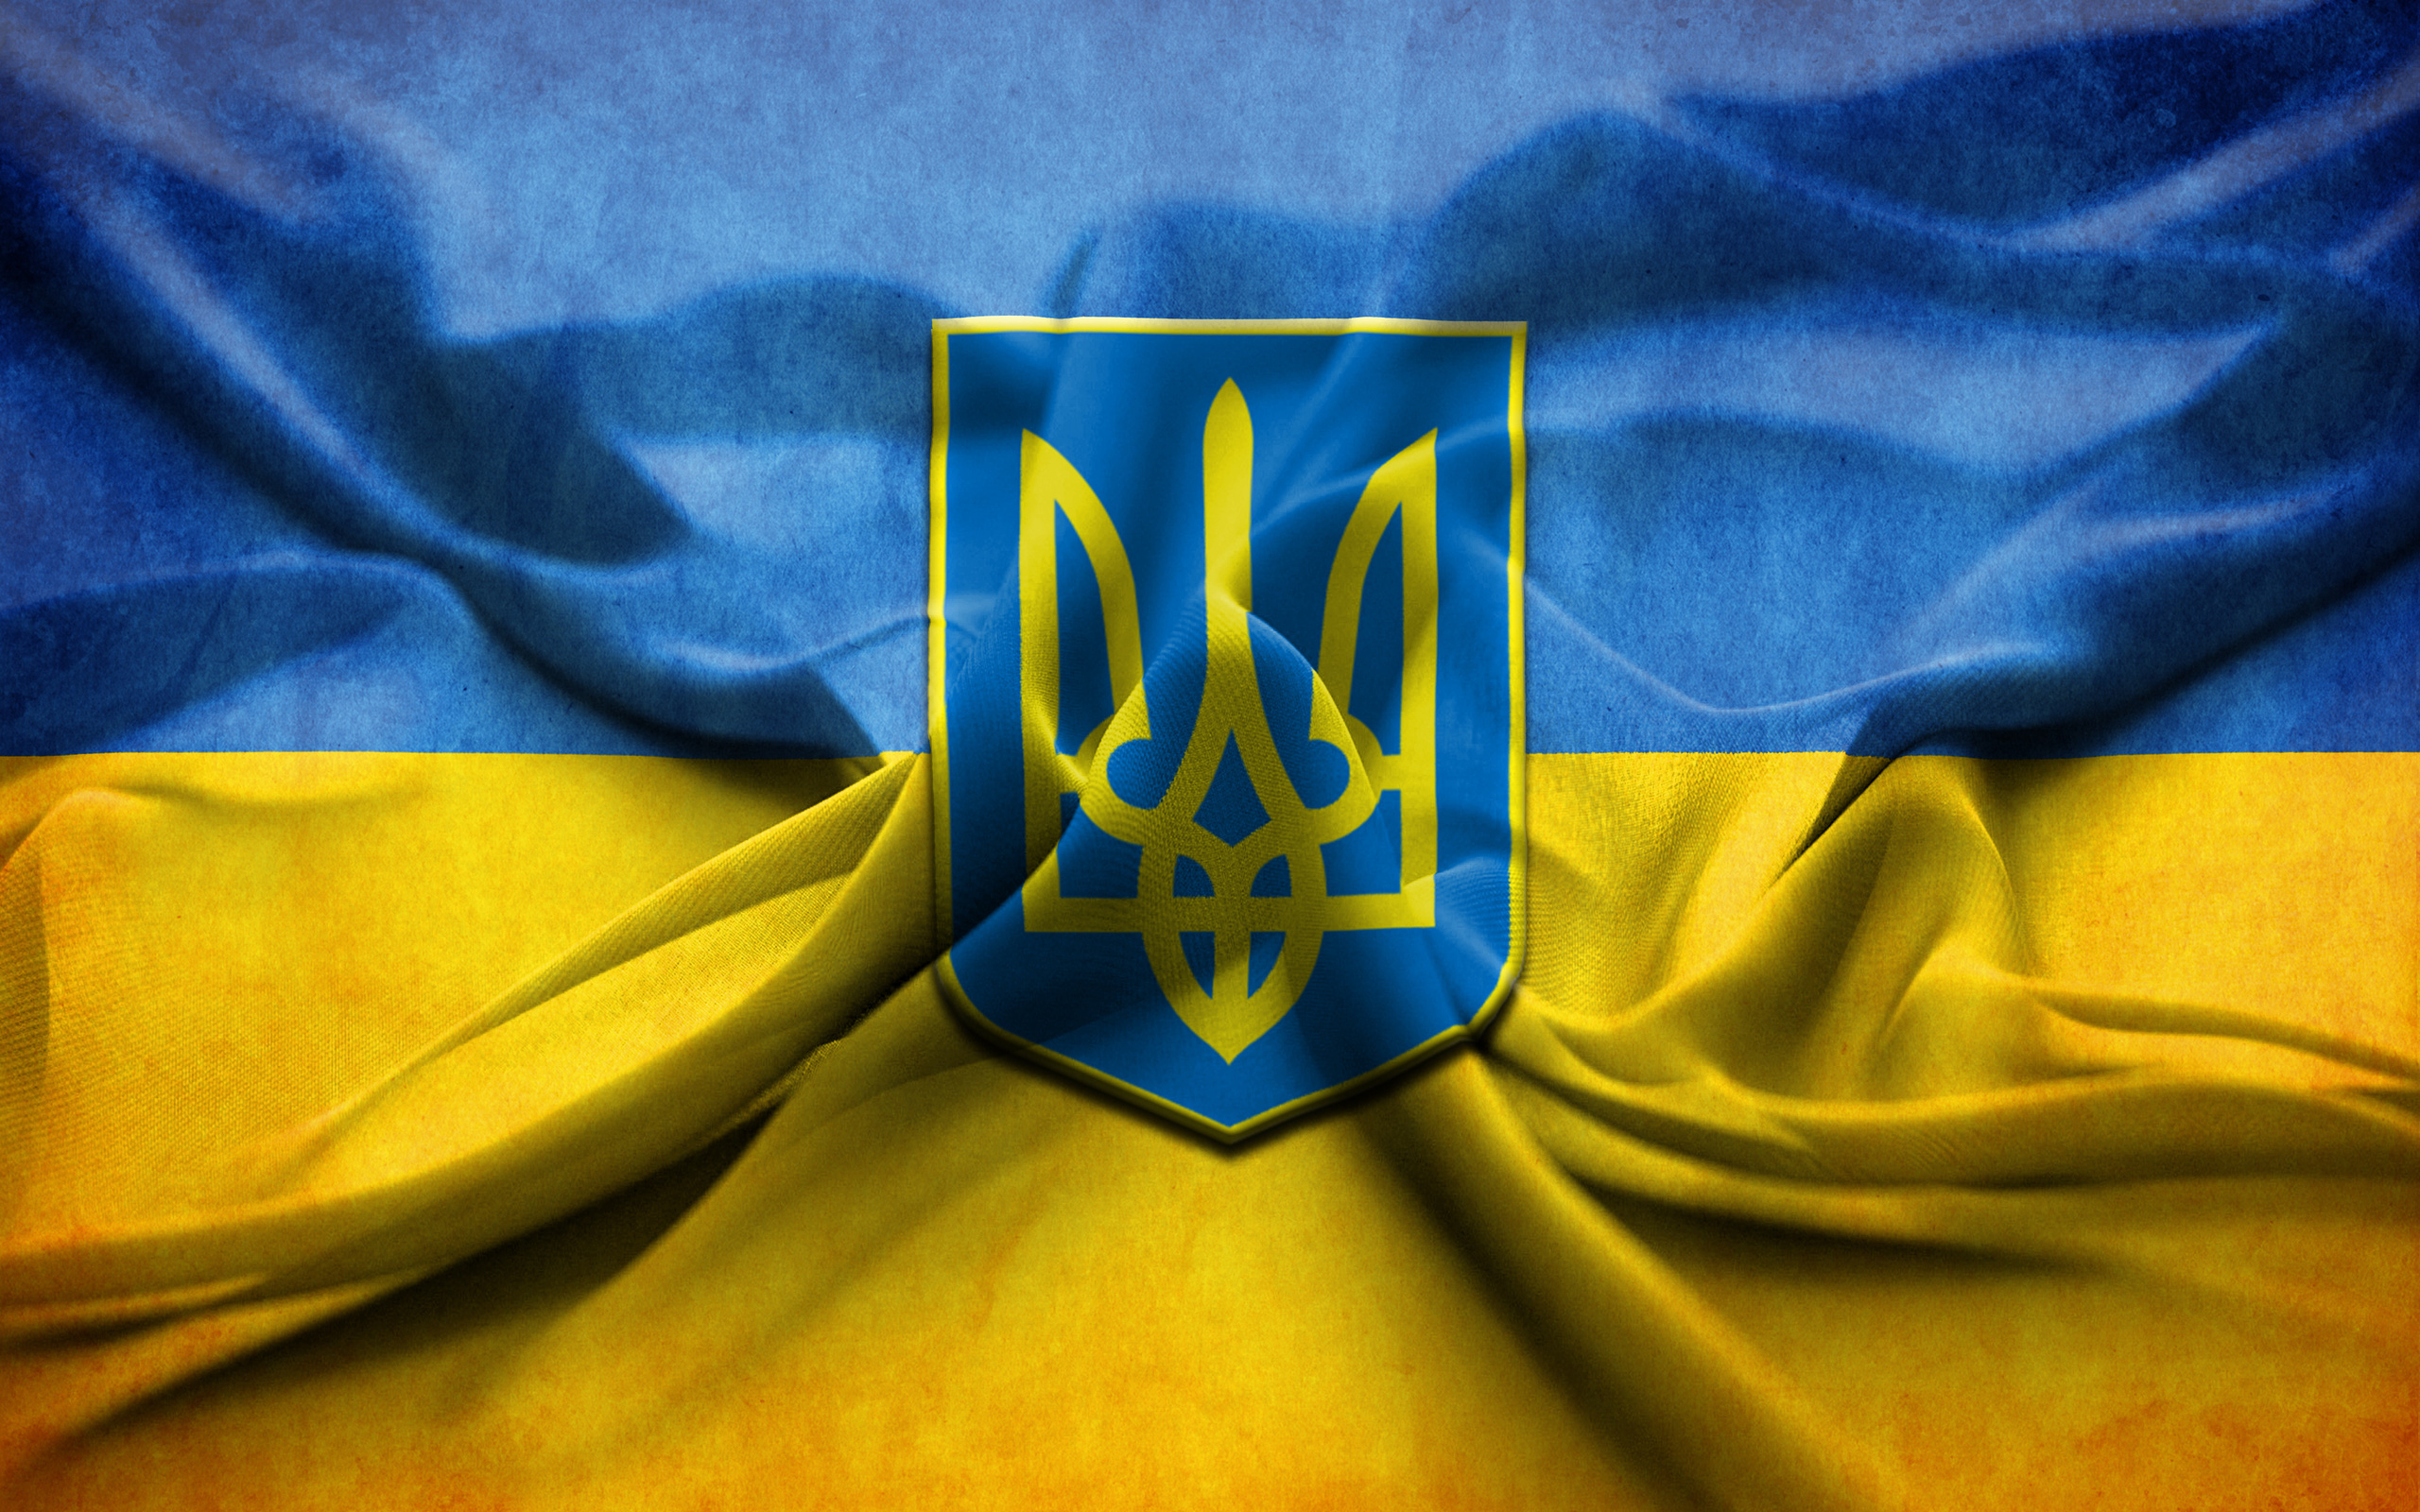 ETH BASED STABLECOIN IN UKRAINE